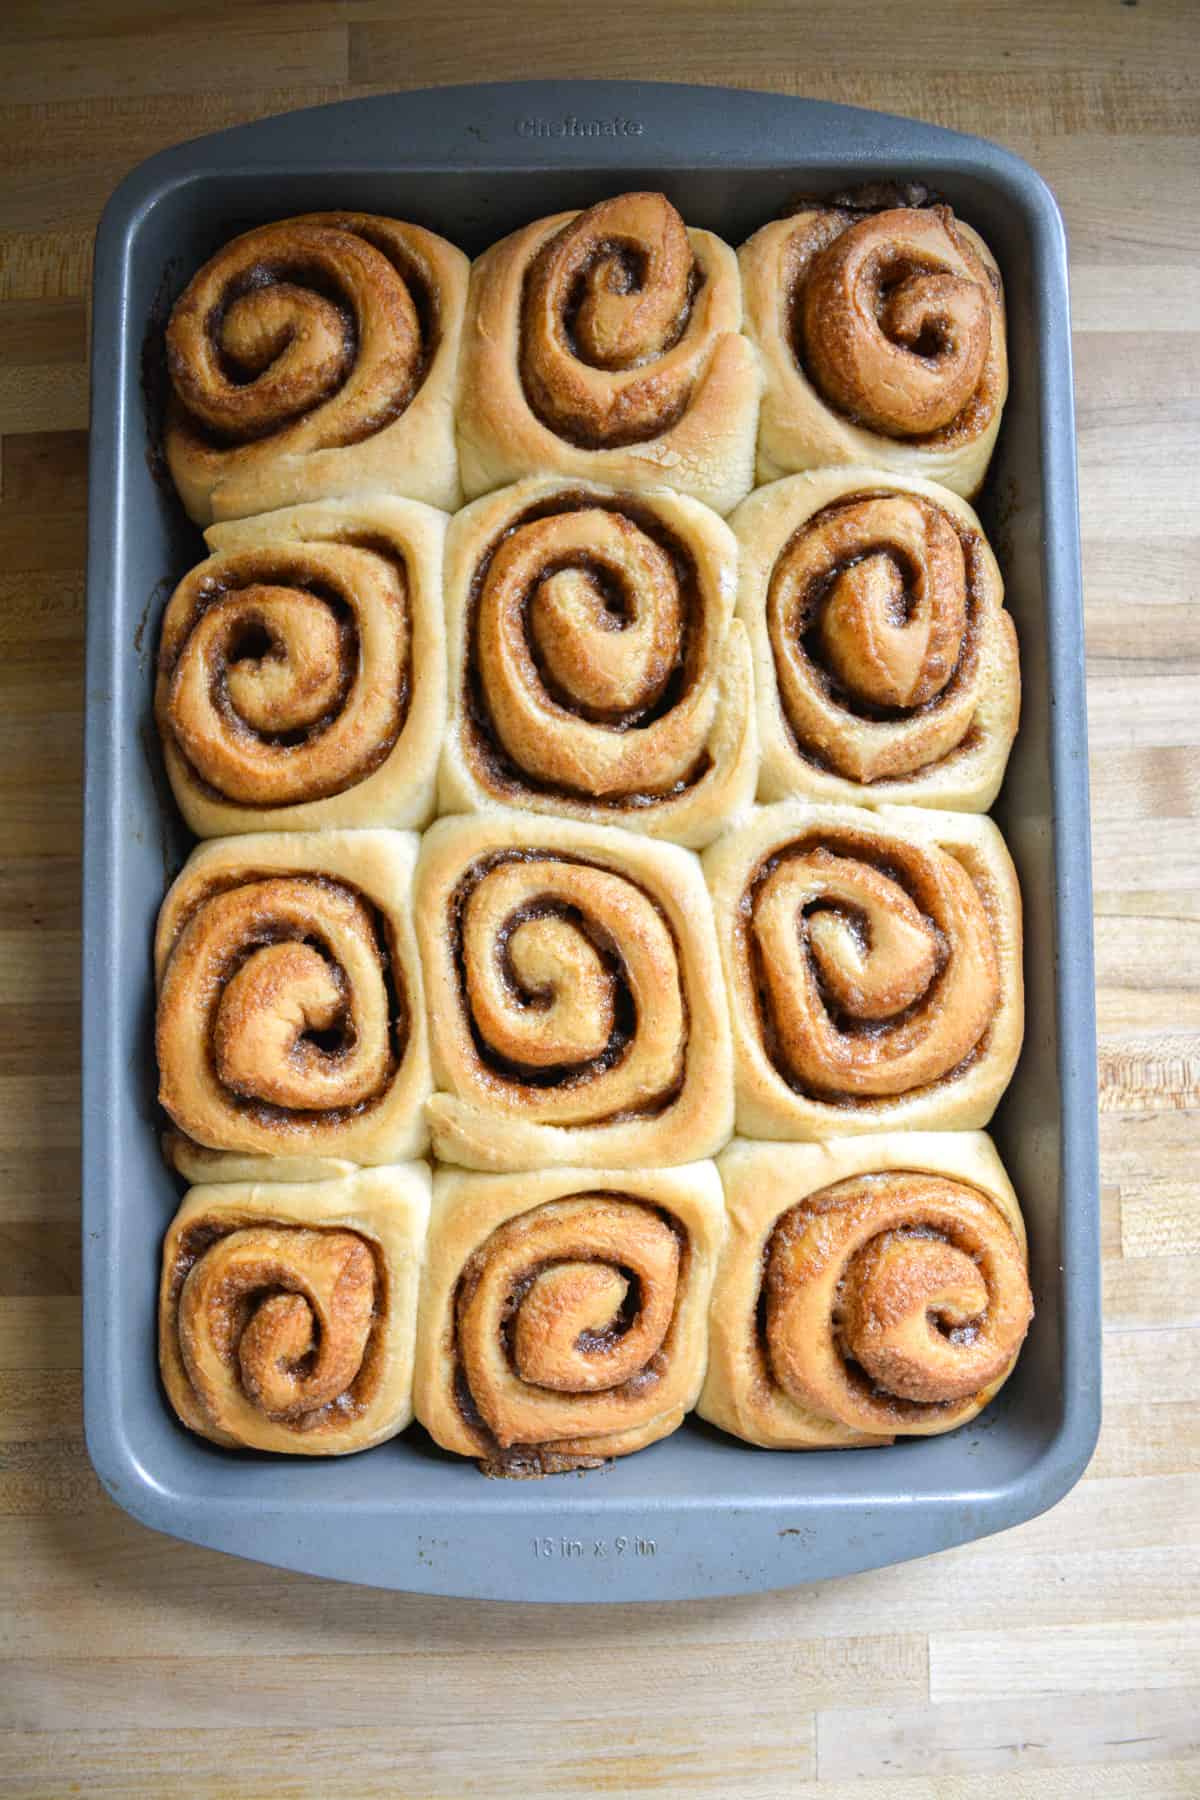 Baked cinnamon rolls in a 9 by 13 baking pan.